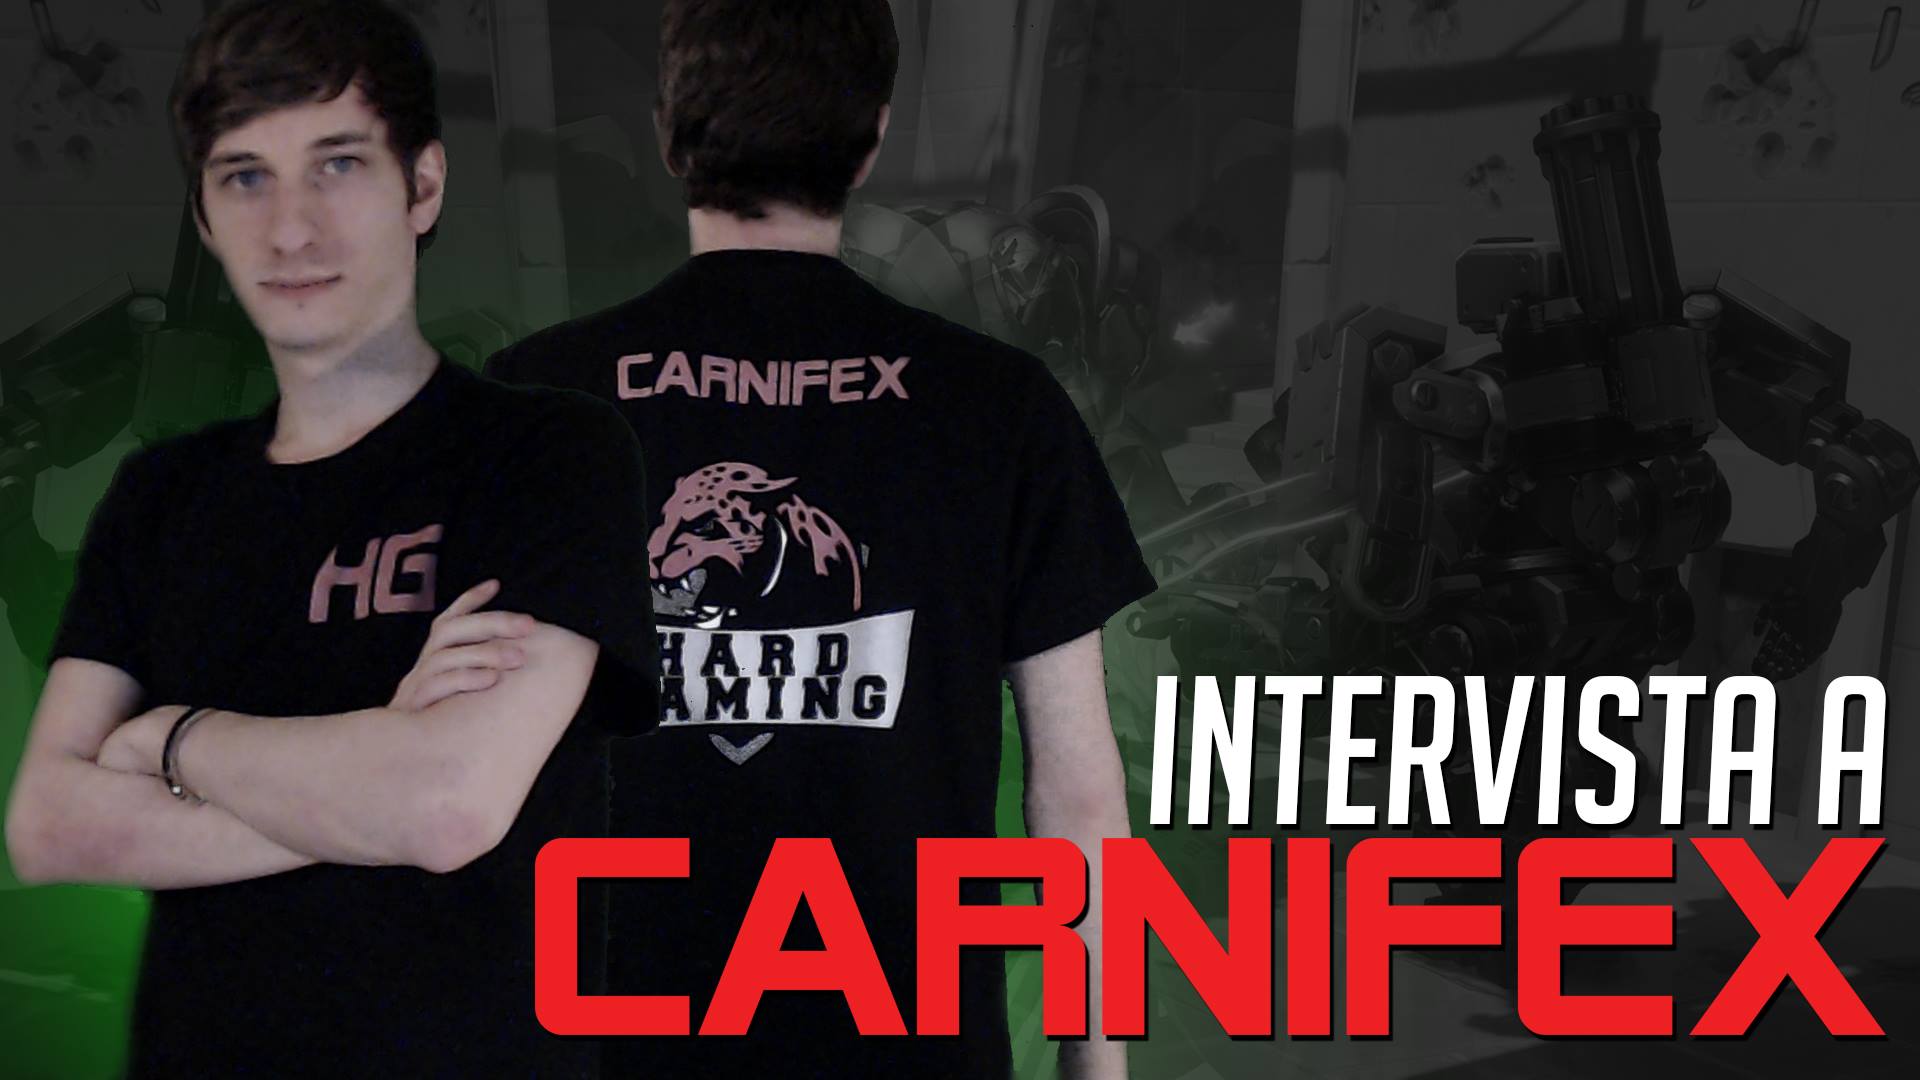 H82 Overwatch intervista Carnifex – Consigli per aspiranti giocatori competitivi